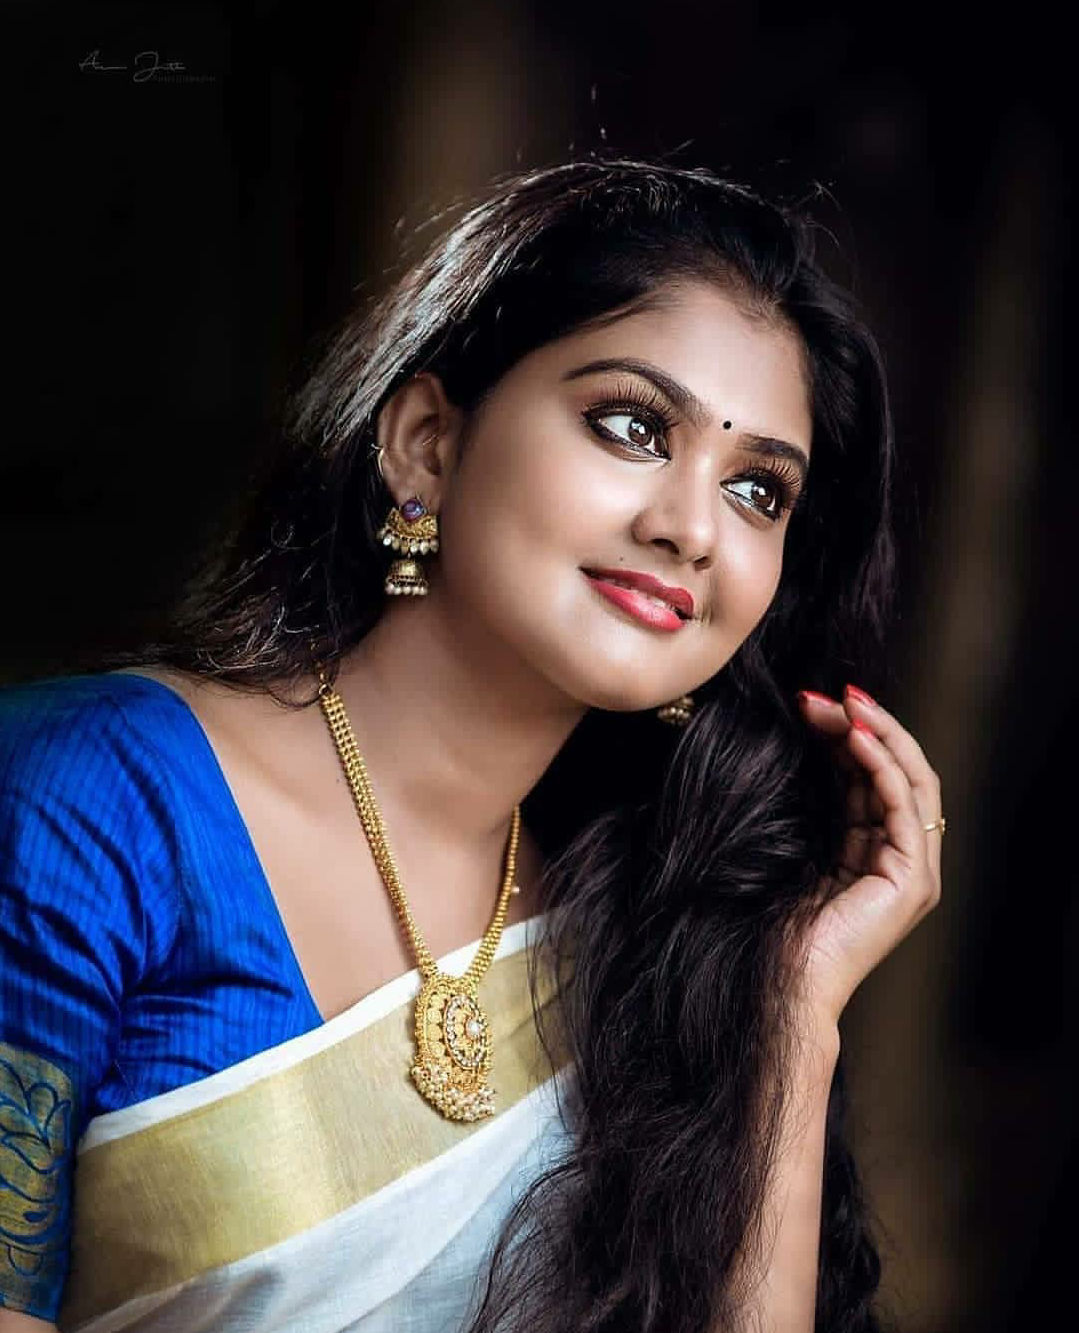 Indian Beauties in Saree- Fabulous Image Gallery!